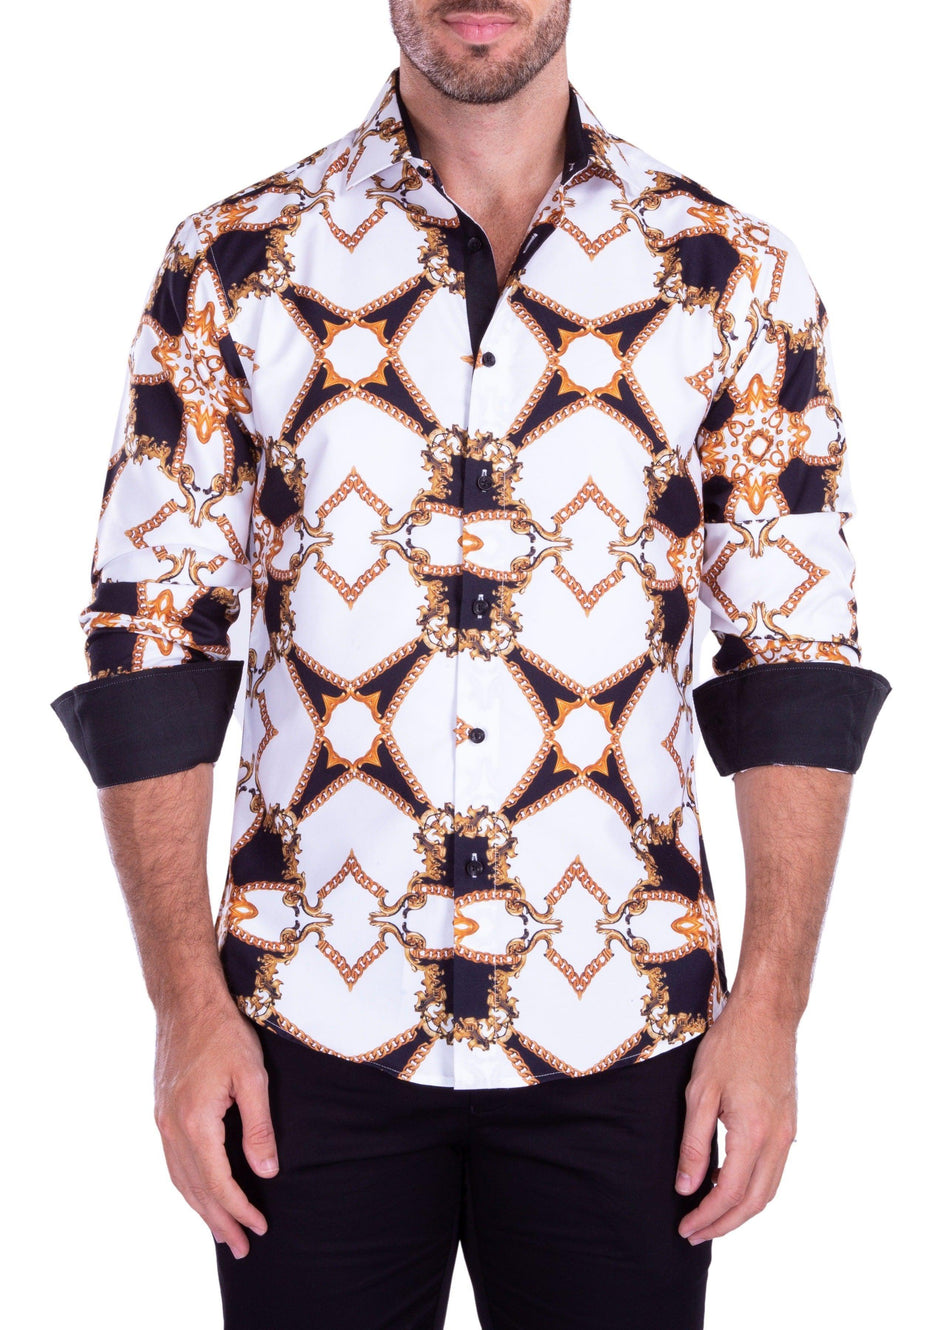 Symmetrical Chain Print Button Up Long Sleeve Dress Shirt